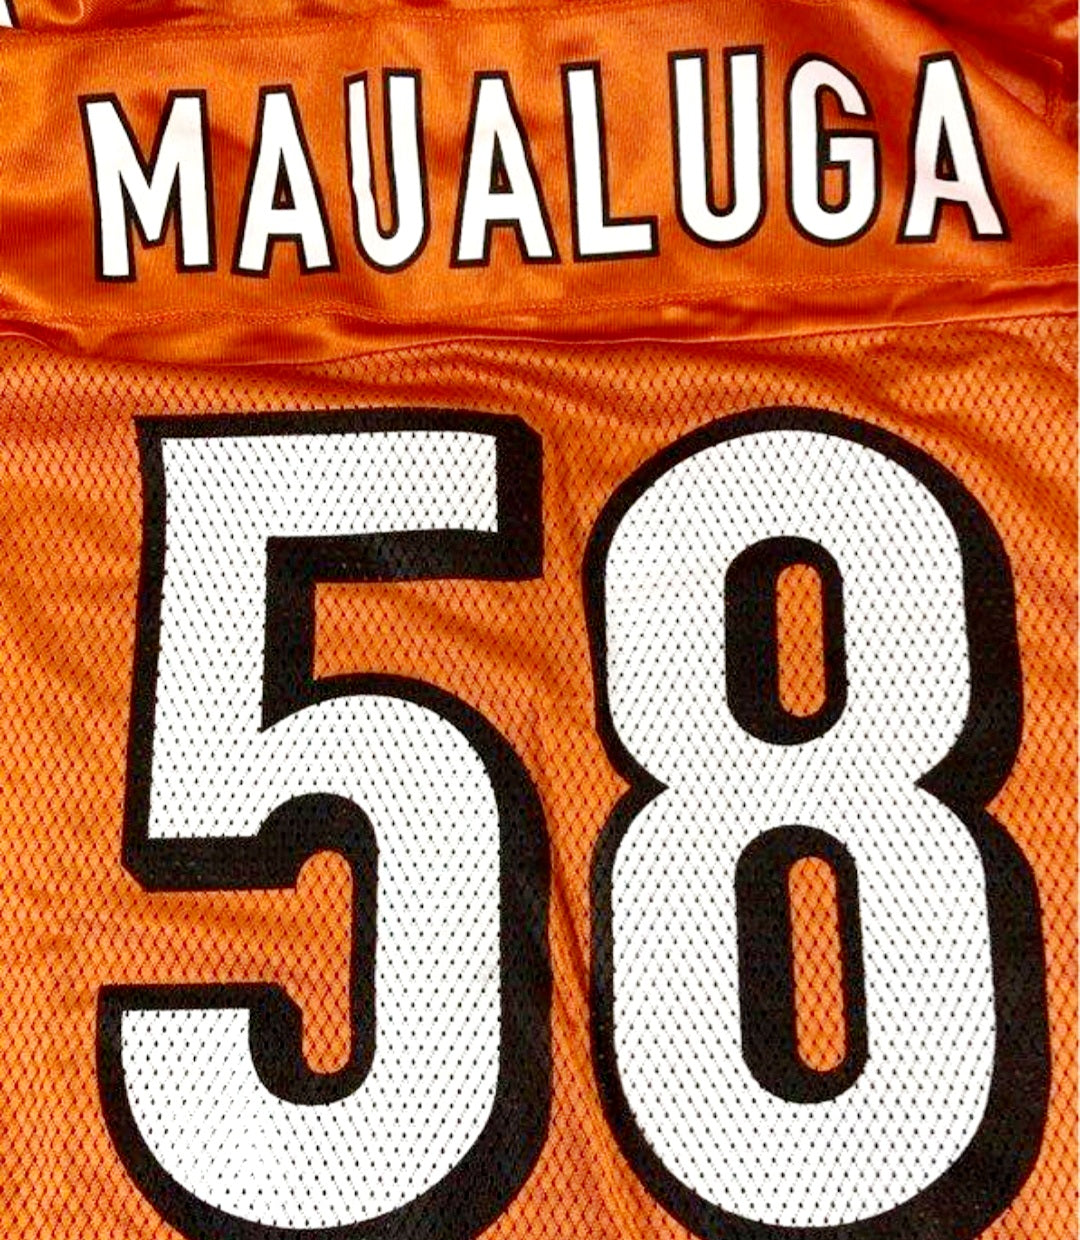 NFL *Reebok Cincinnati Bengals 'Maualuga' #58 Orange & Black Jersey (XL)